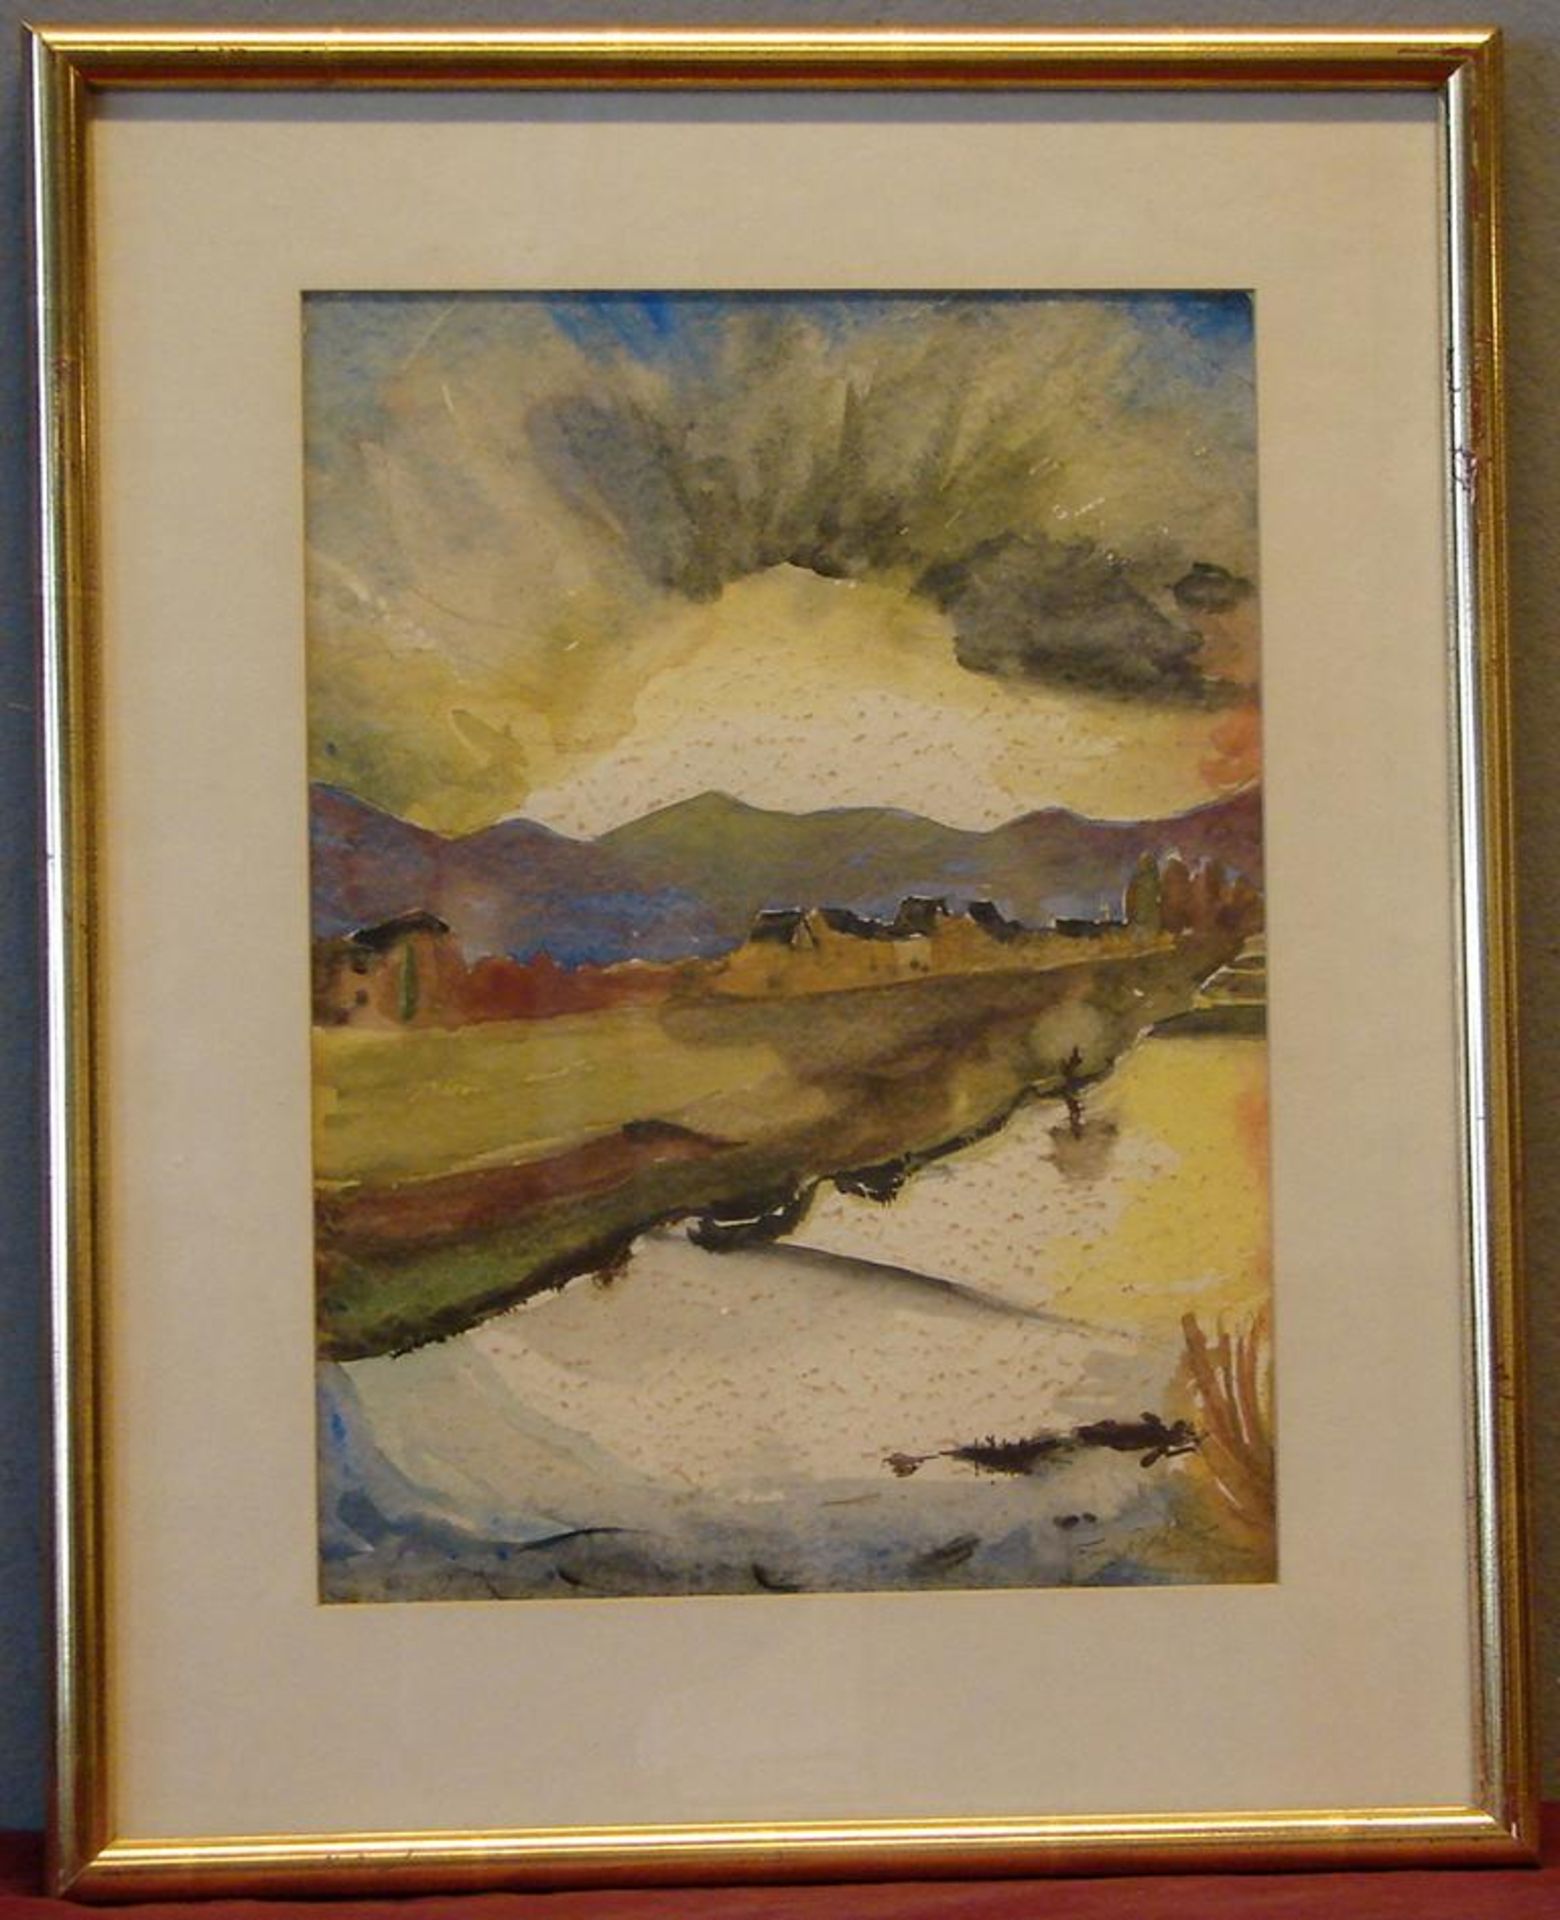 "Landschaft", Aquarelle, u.re.unles.sig. Franz…, dat. 55, ca. 28 x 39 cm- - -22.00 % buyer's premium